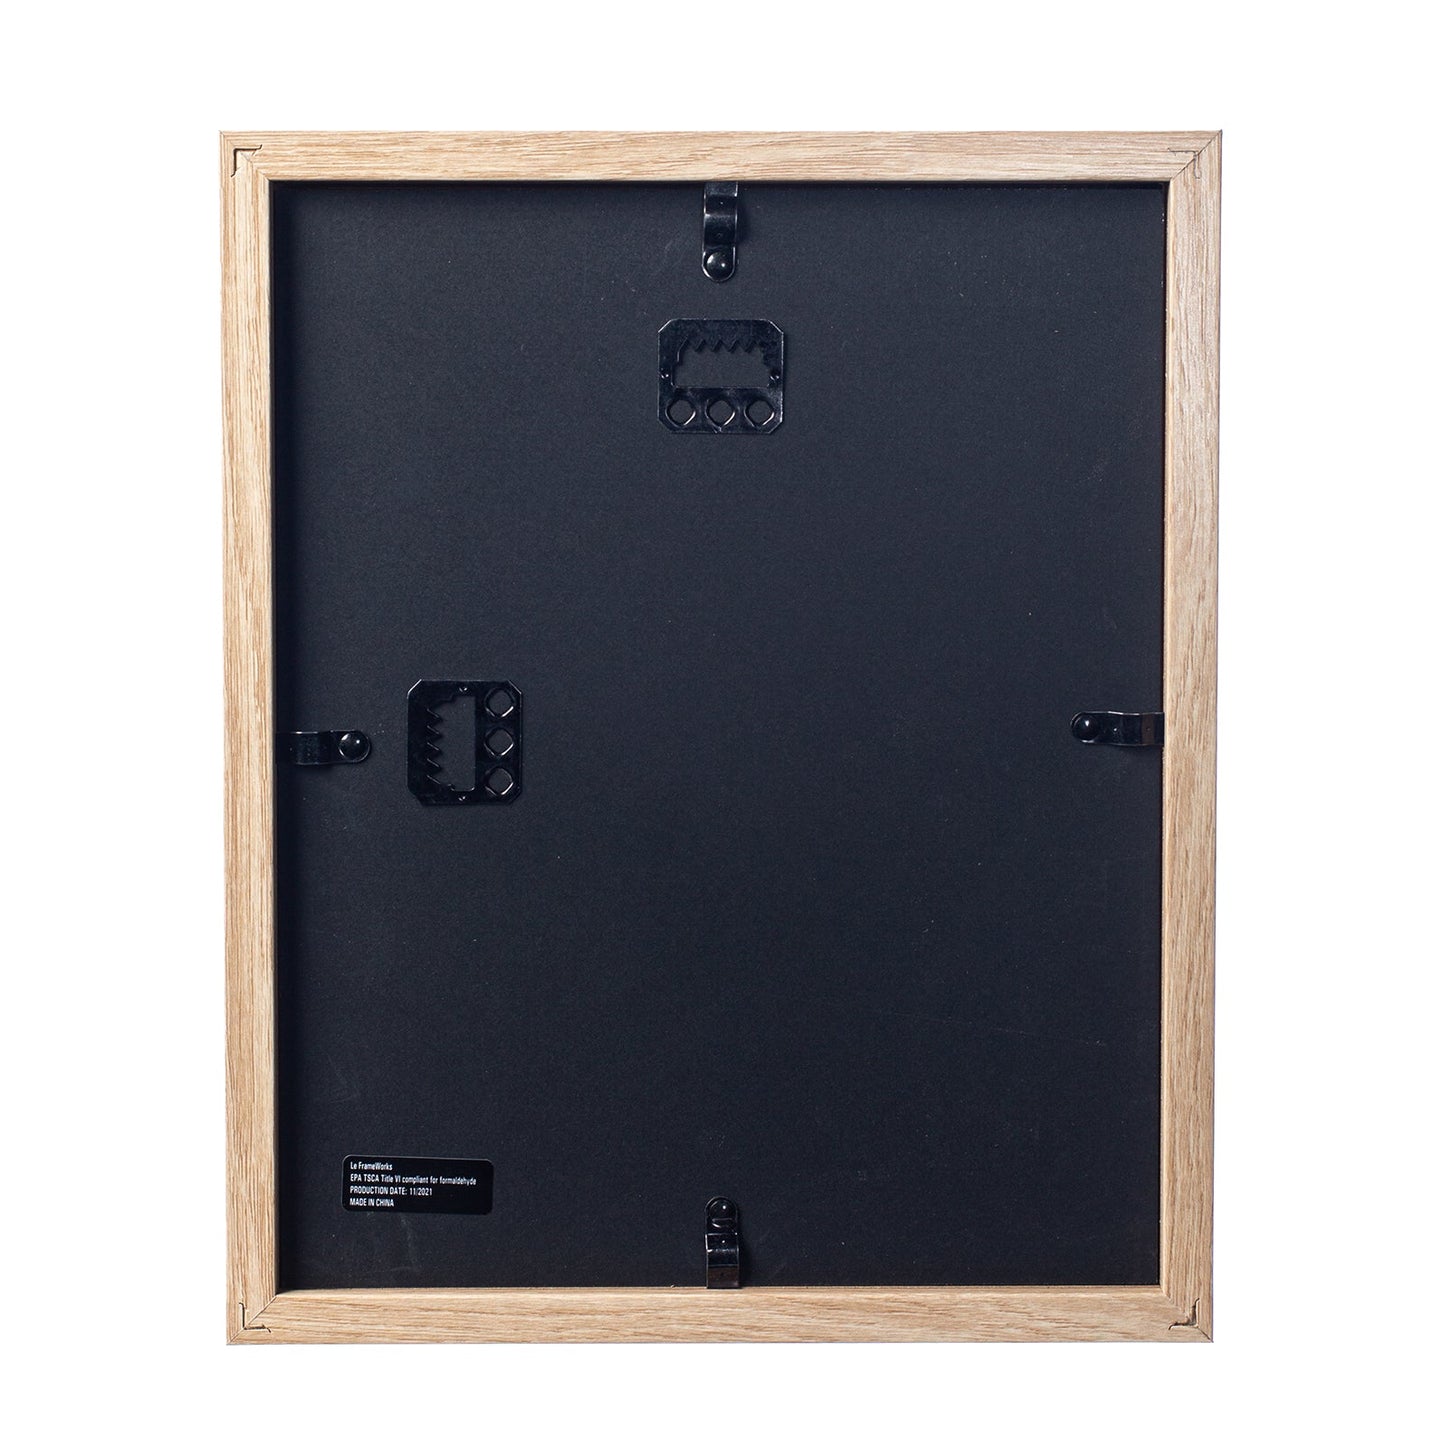 8” x 10” Natural Oak MDF Wood Shadow Box Frame